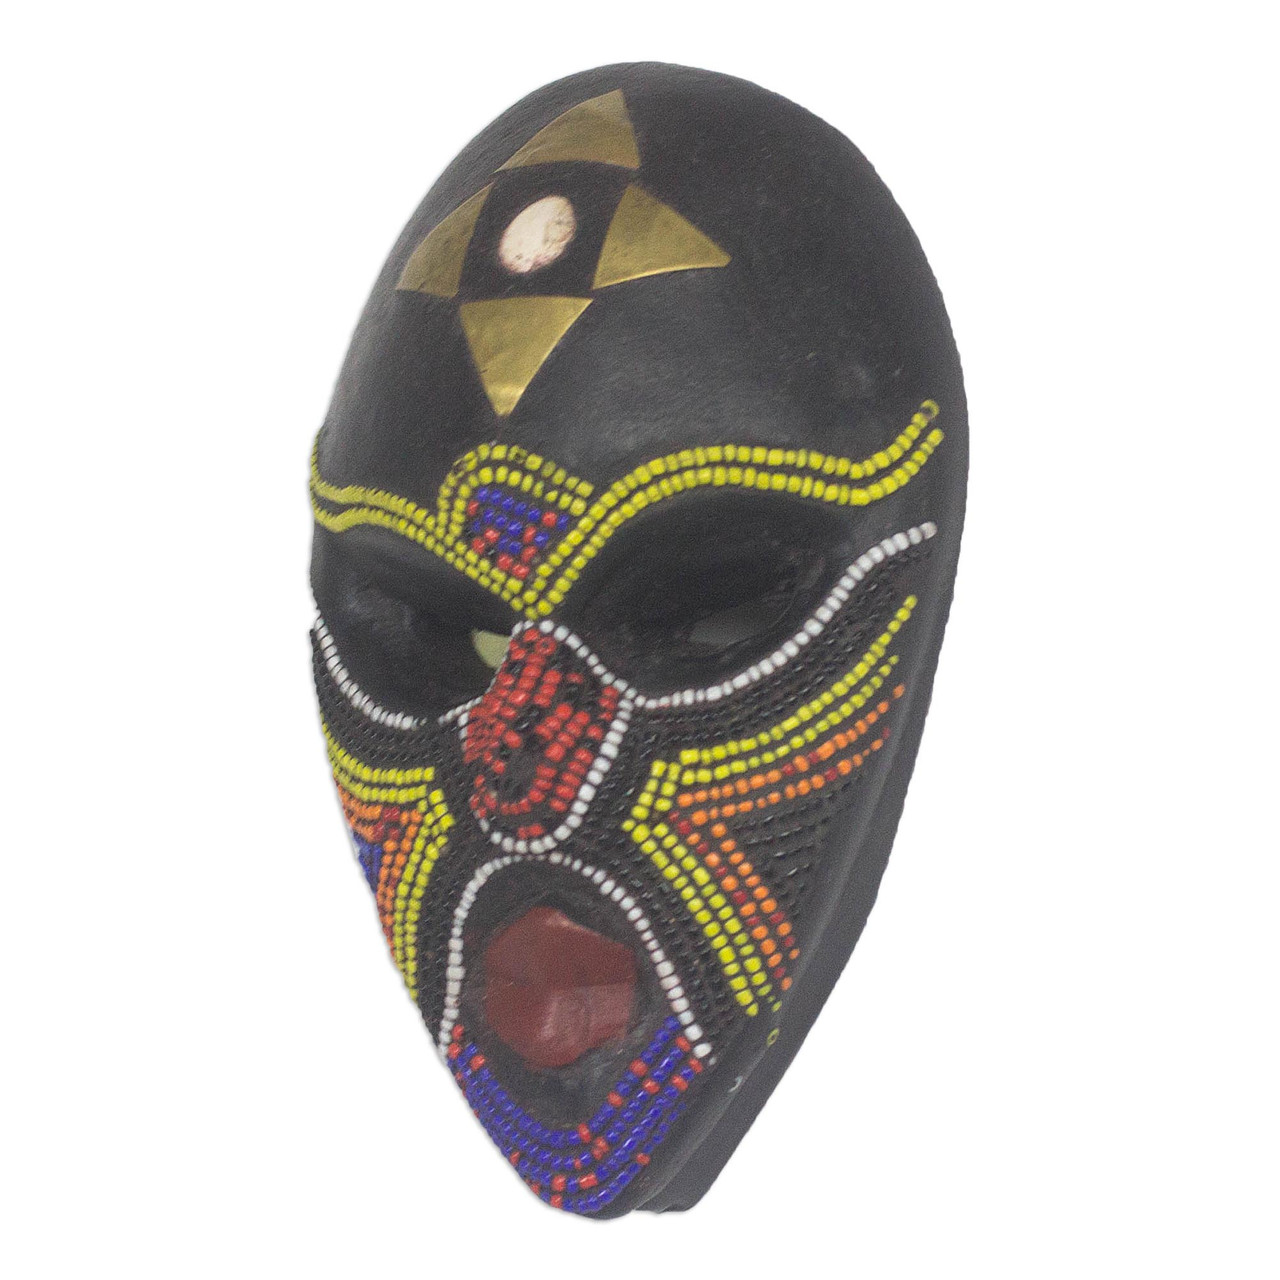 African Mask, Shard Bead, Intricate Tribal Mask, Donna Perlinplim, Ceramic  Bead, Multicolored Photo Decal, Indigenous Mask, Wabi Sabi 